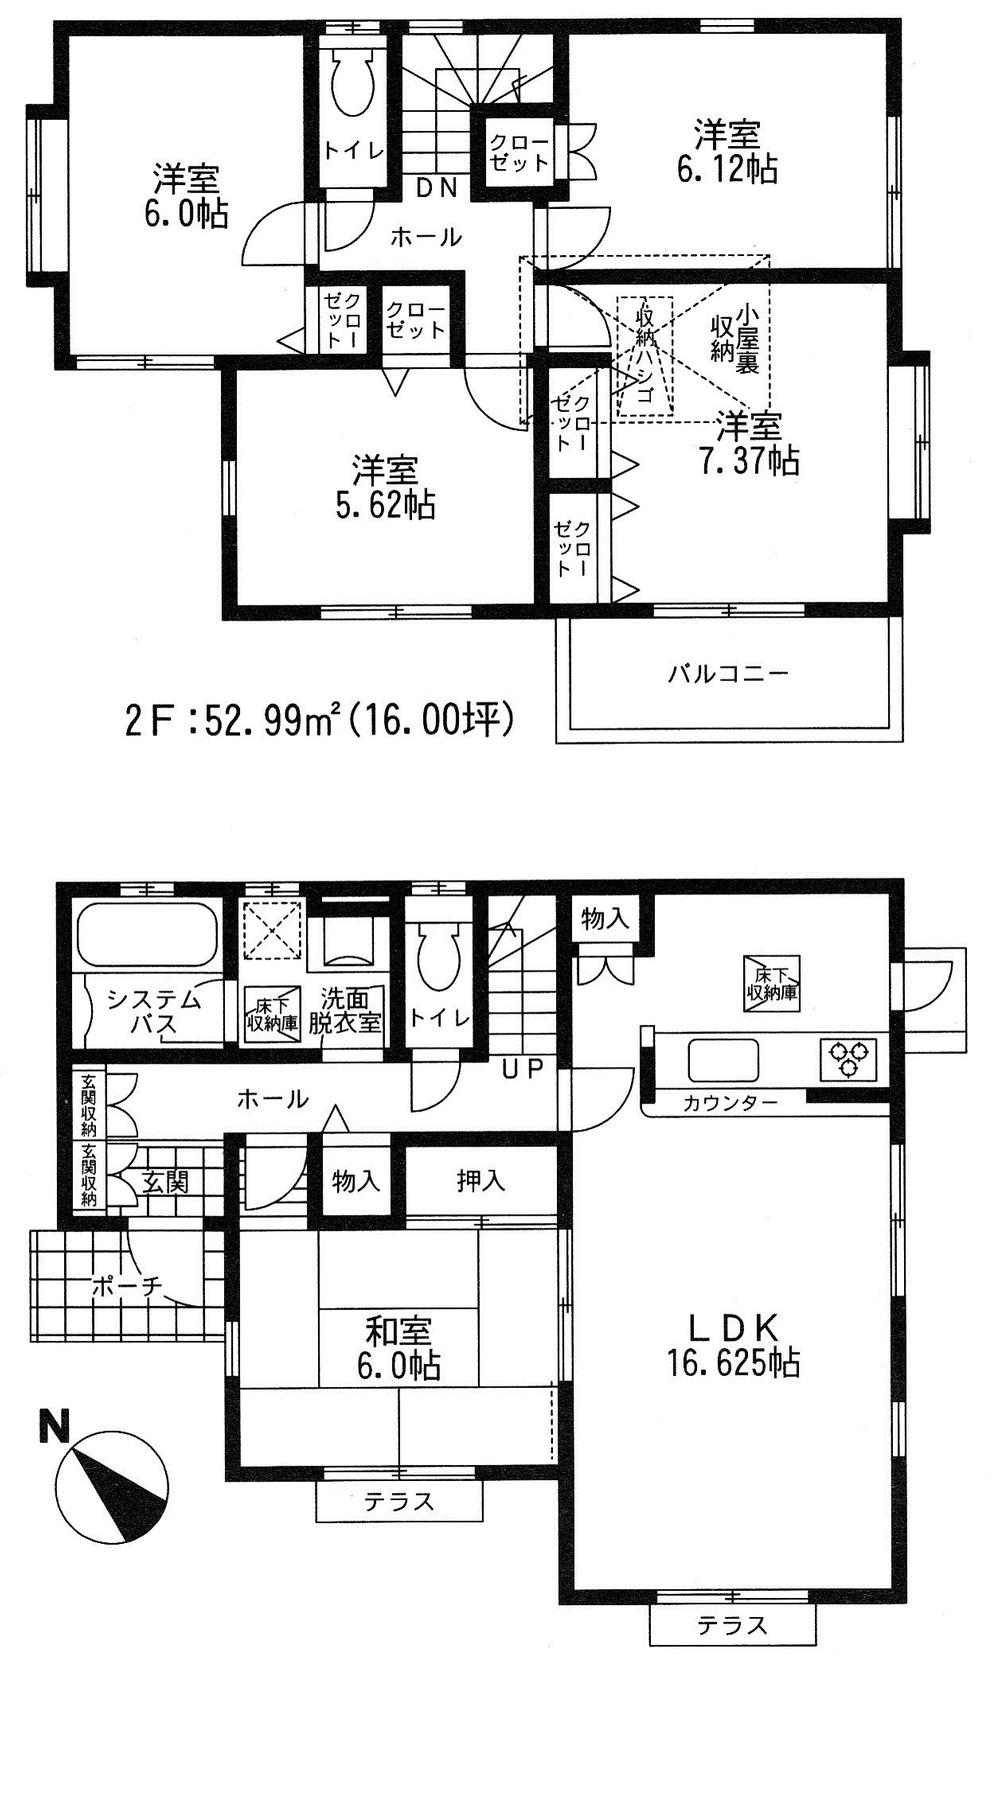 Floor plan. 32,500,000 yen, 5LDK, Land area 203.52 sq m , Building area 110.95 sq m